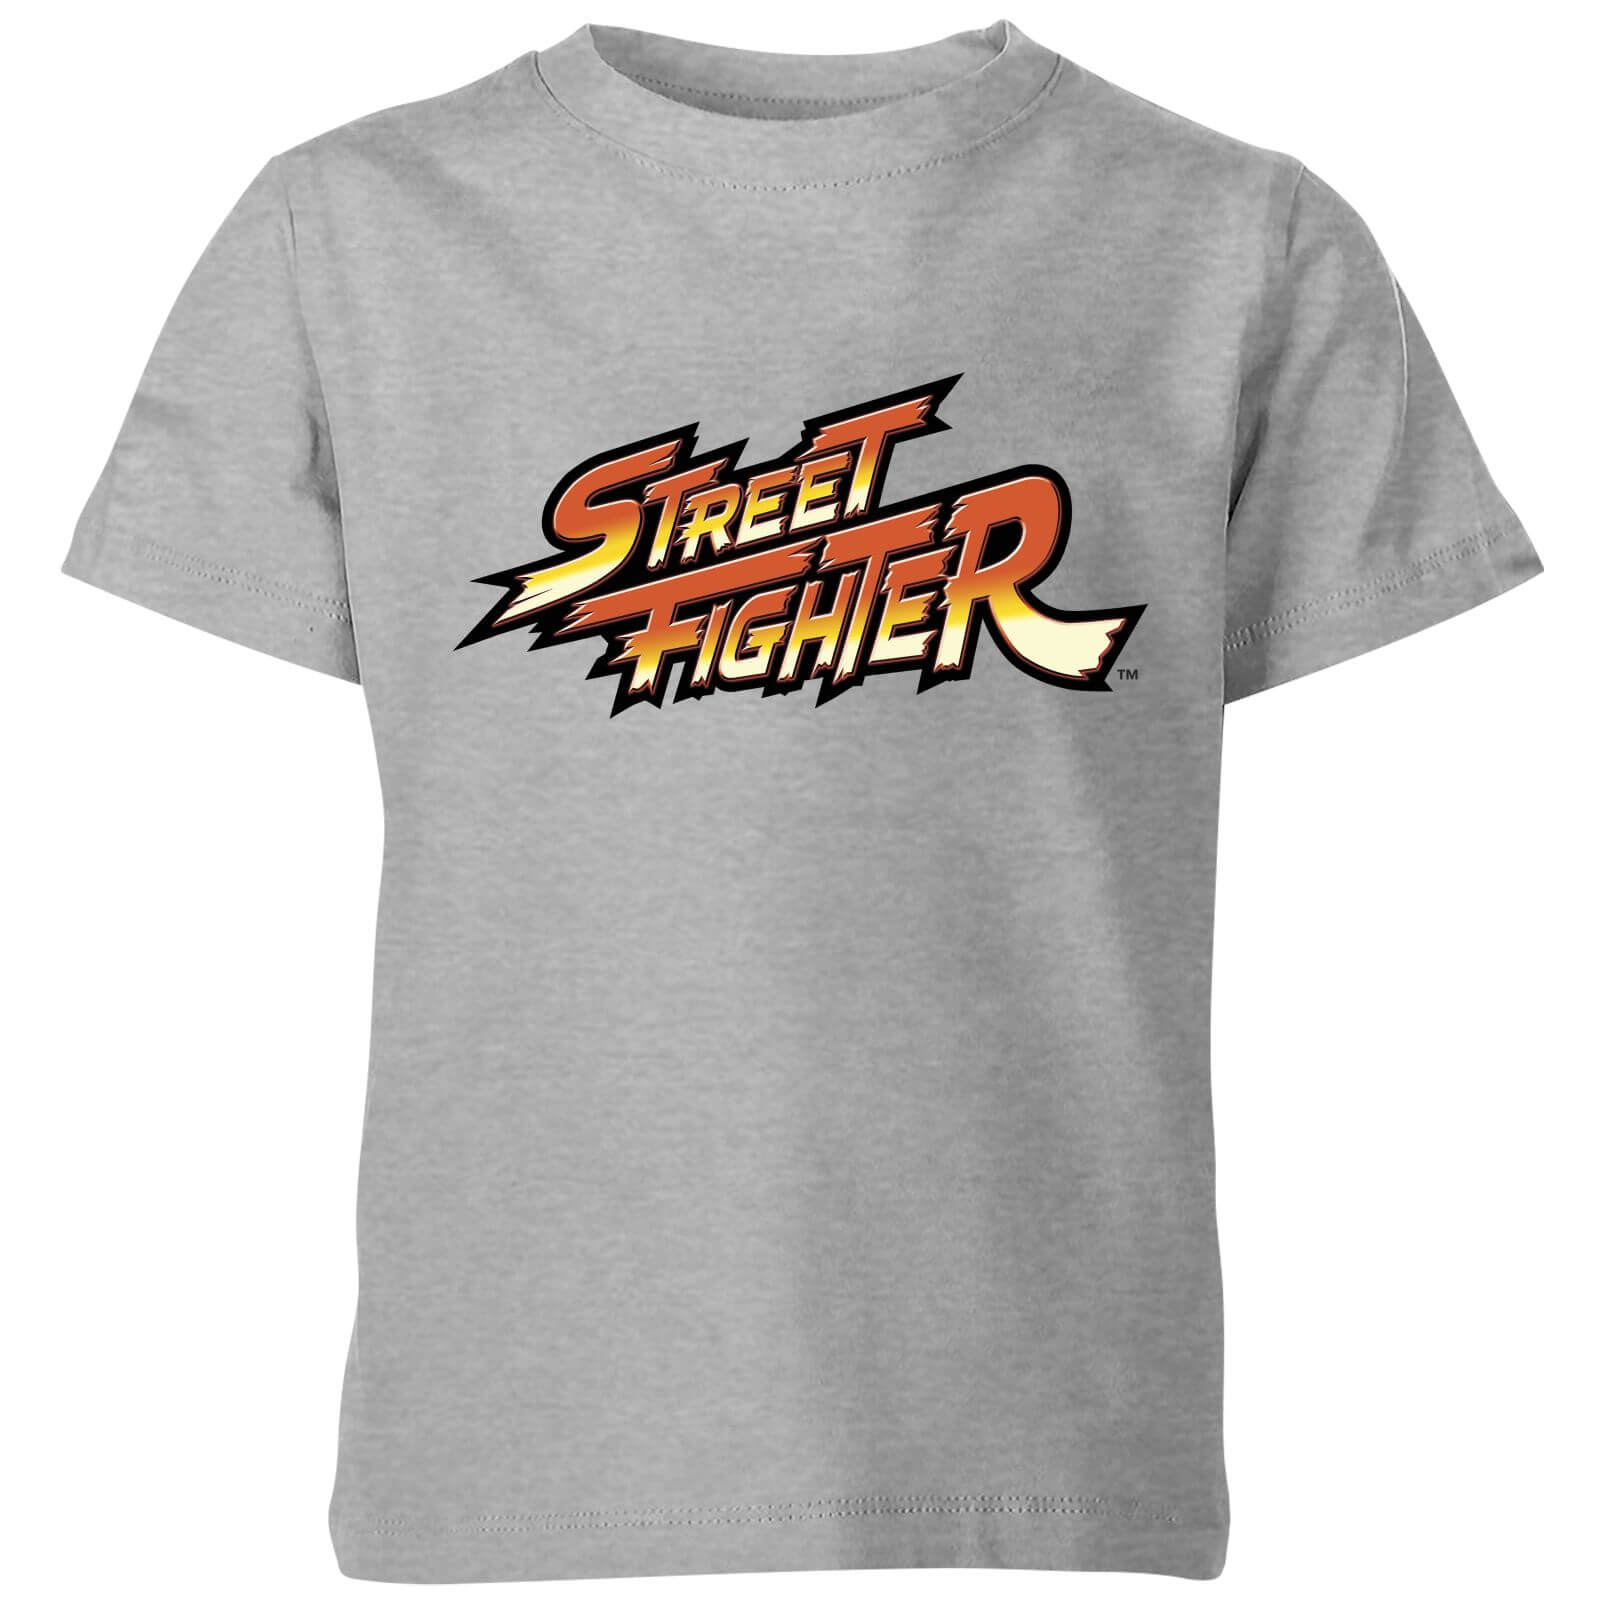 Street Fighter Logo Kids' T-Shirt - Grey - 7-8 Years